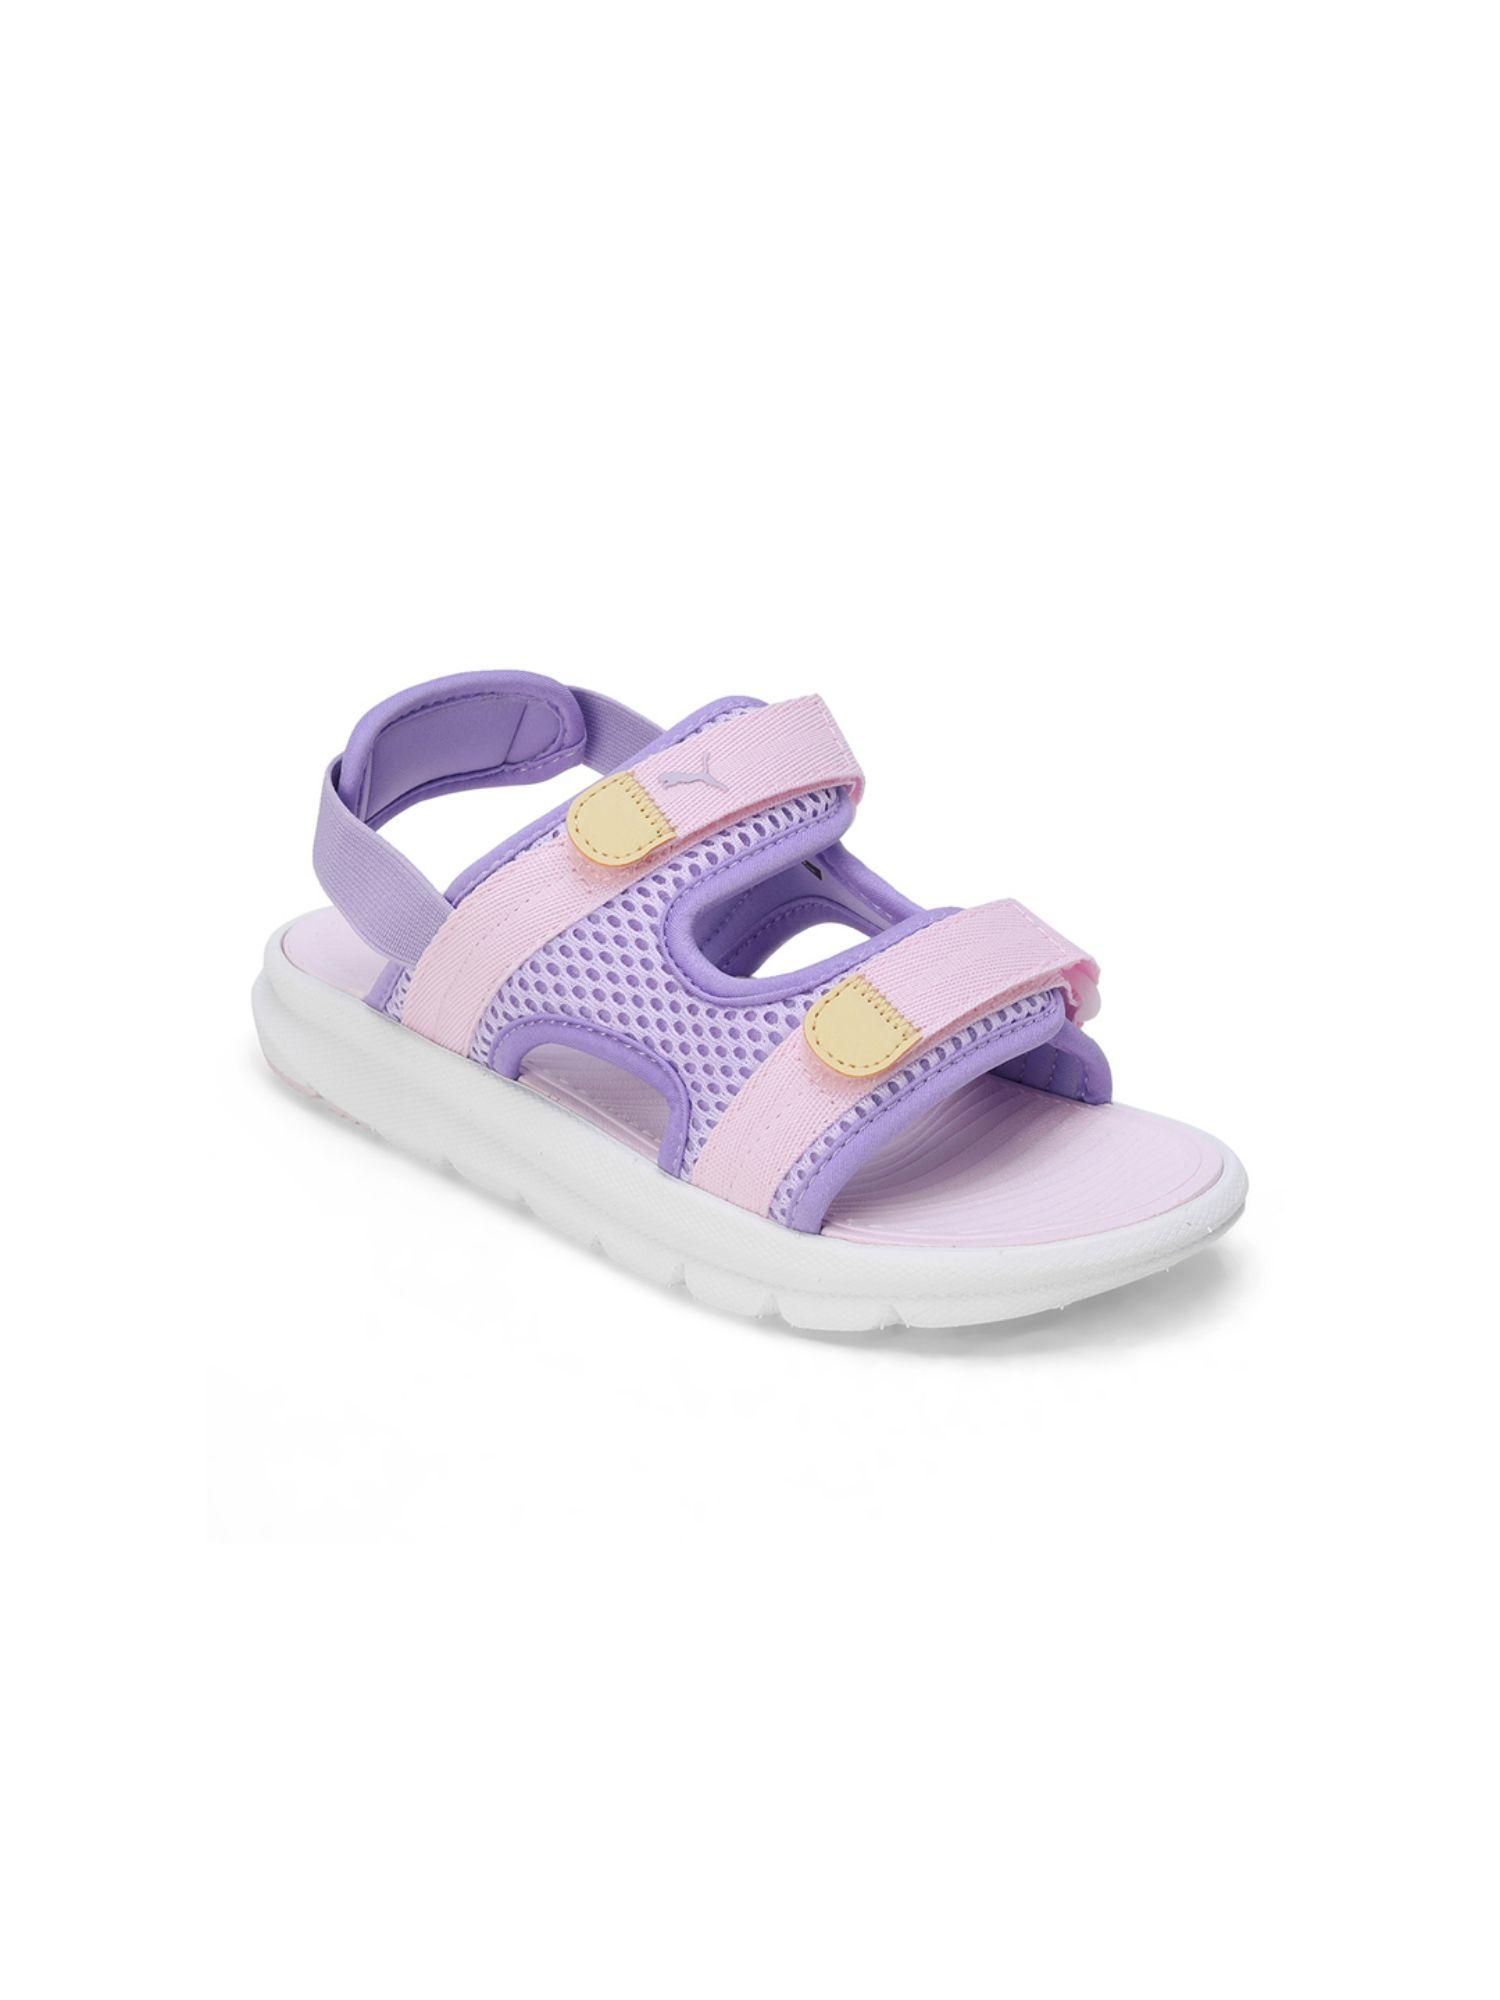 evolve sandal pre-school kids purple sandal